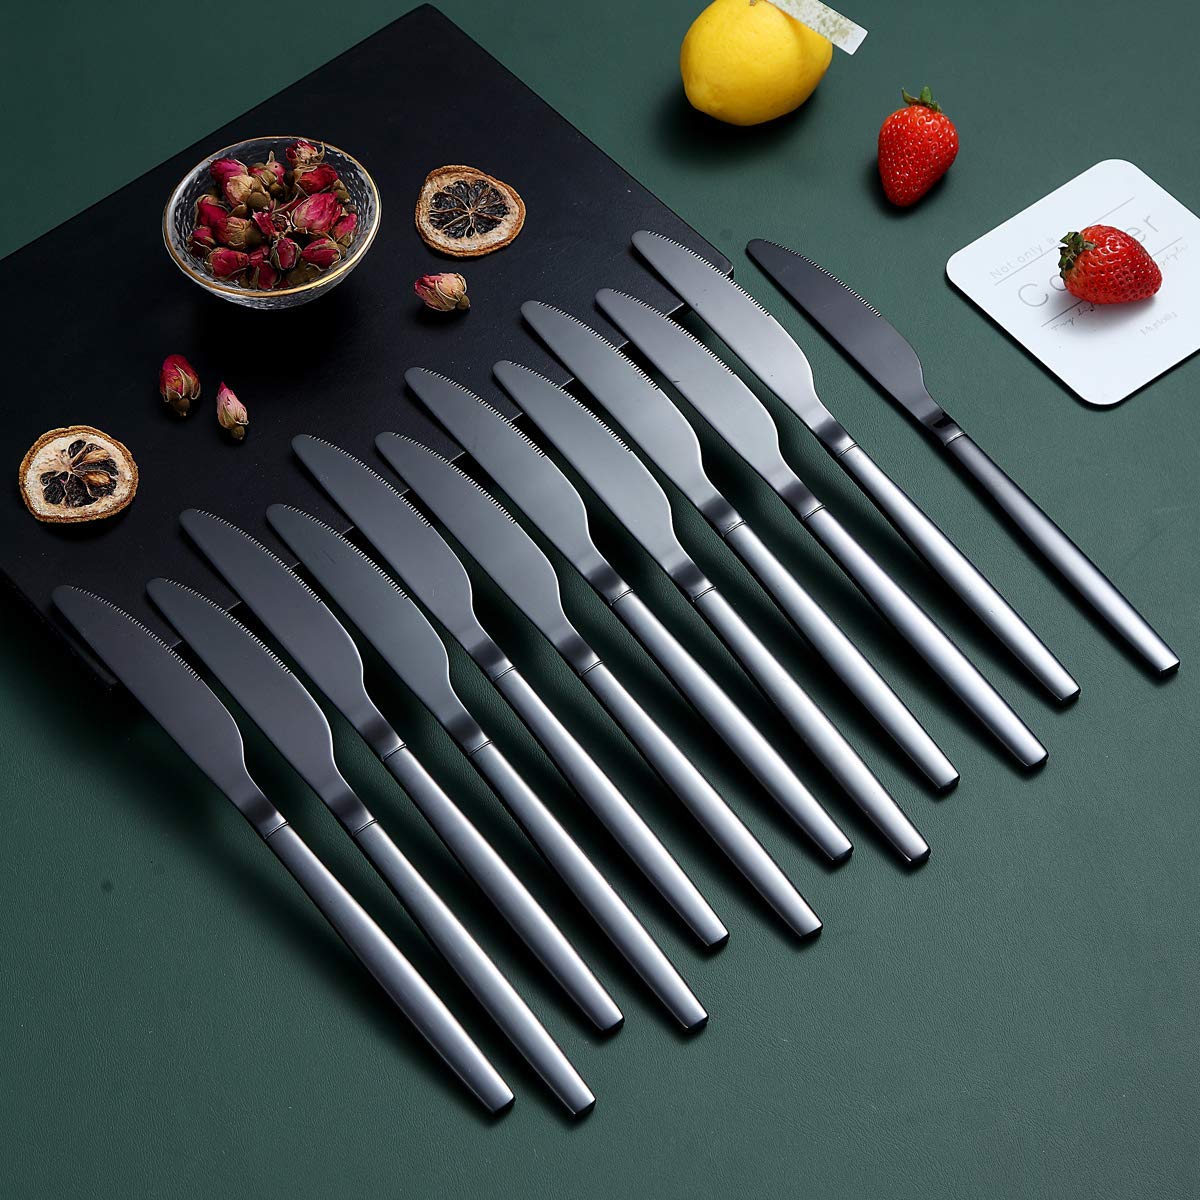 Berglander Black Dinner Knives Set Of 12, Titanium Shiny Black Plating Stainless Steel Dinner Knife, Butter Knife Table Knives Dishwasher Safe